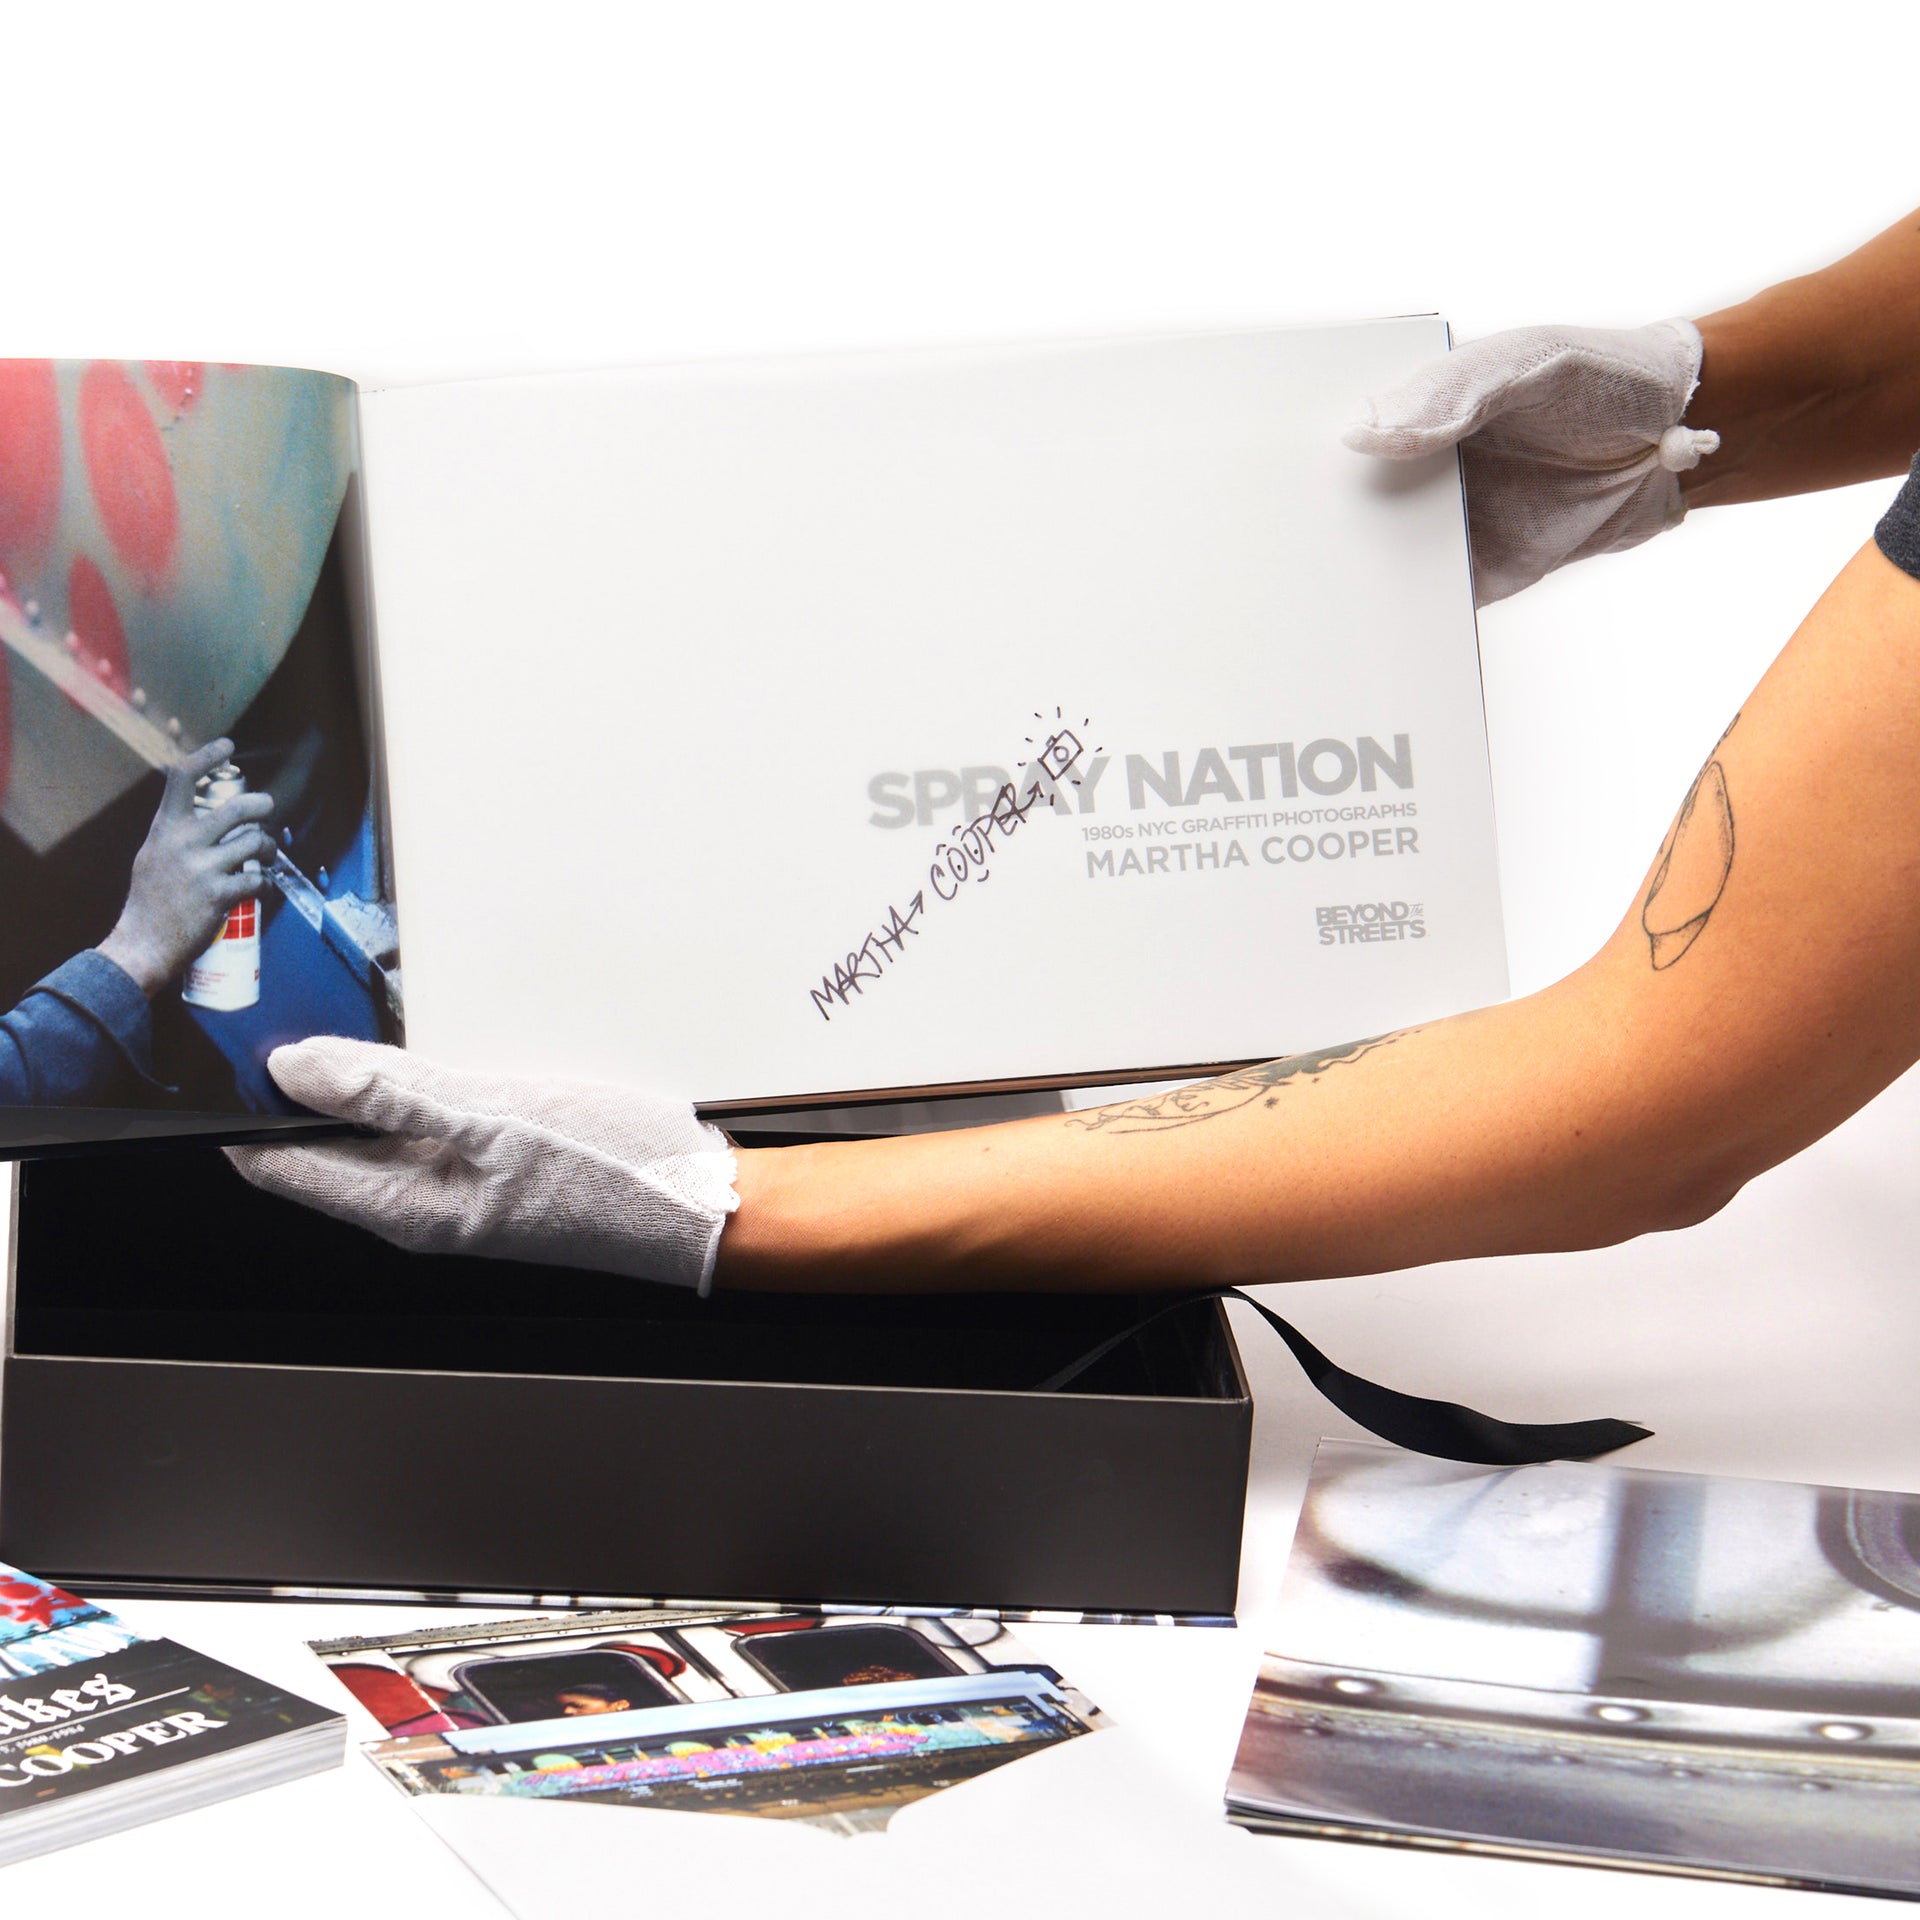 Martha Cooper Limited Edition "Spray Nation Box Set"